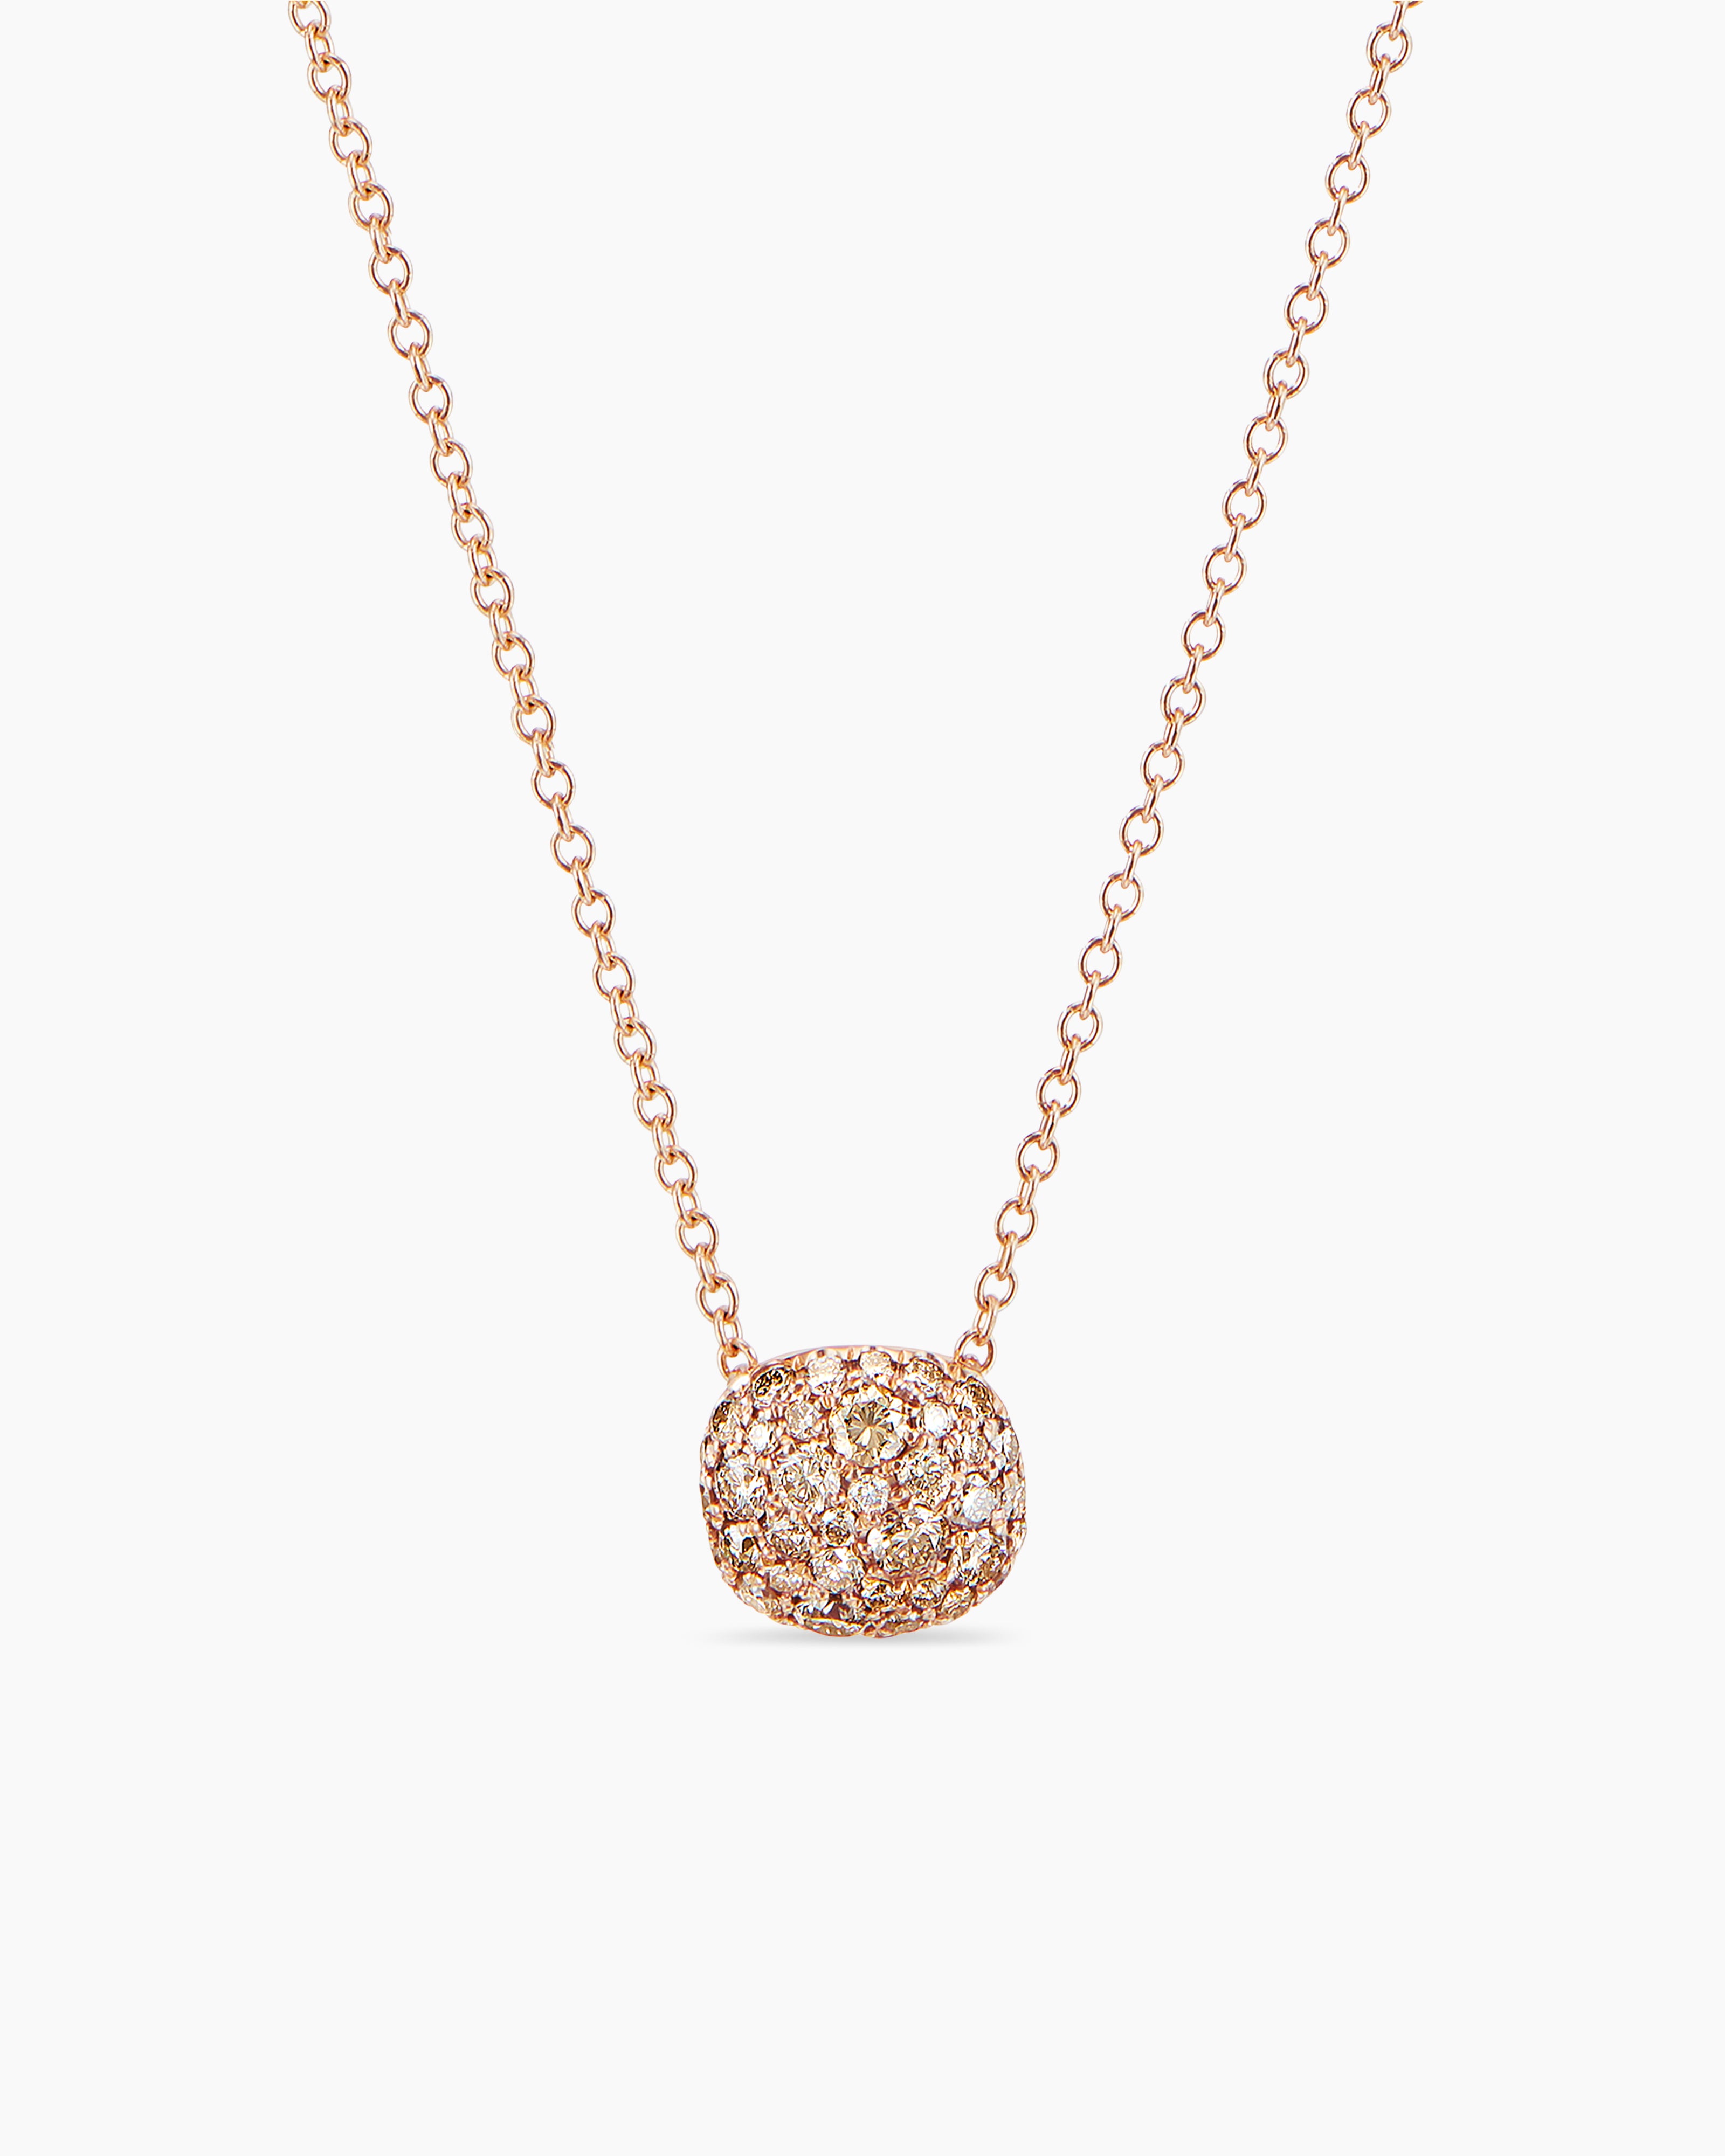 David Yurman Heart Pendant Necklace in 18K Rose Gold with Morganite